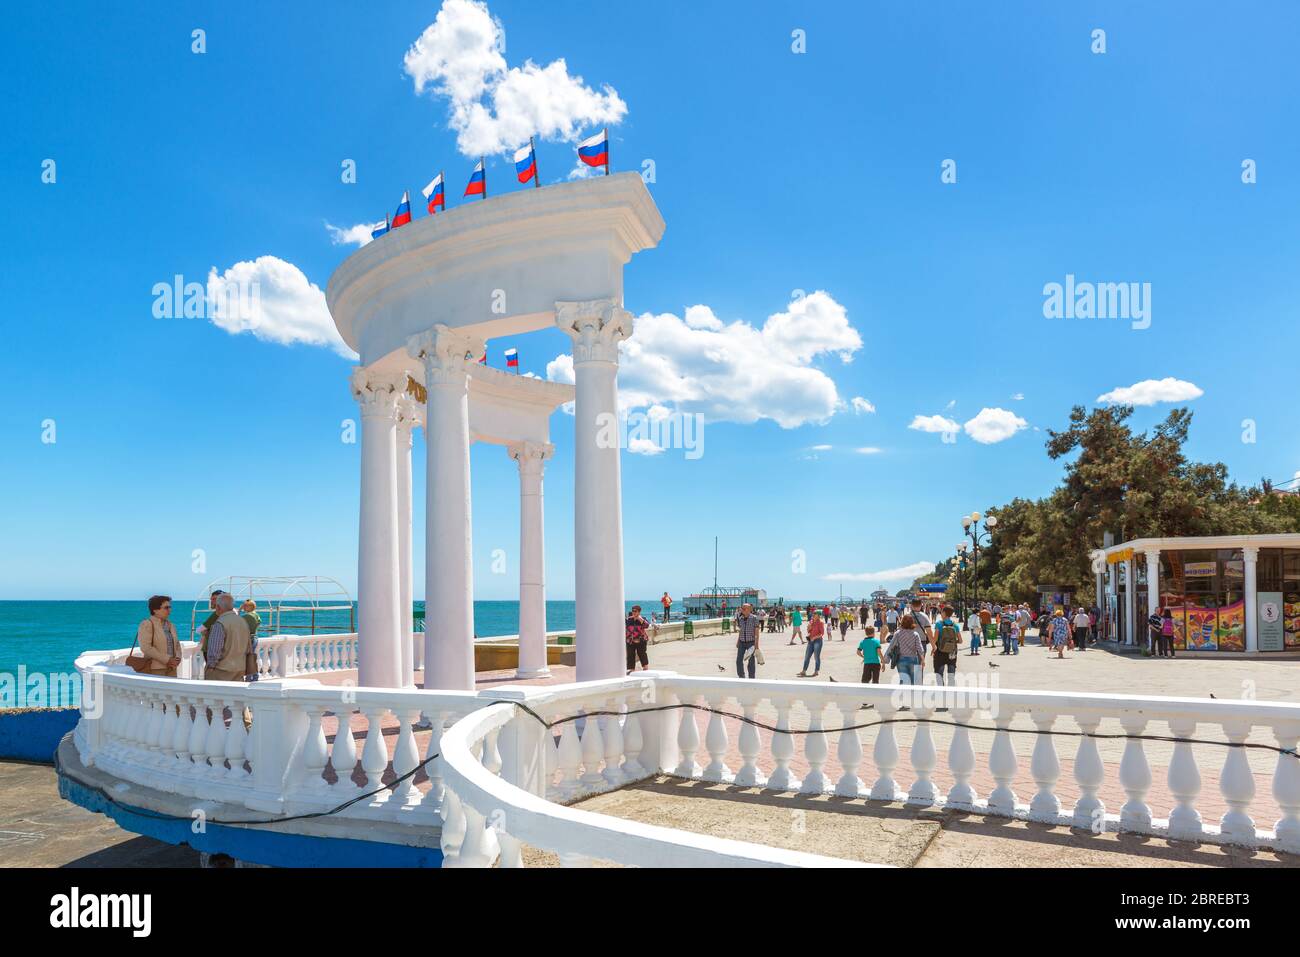 ALUSHTA, CRIMEA - MAY 15, 2016: People visit the urban beach in Crimea, Russia. Scenic view of the Black Sea waterfront in Crimea. White colonnade wit Stock Photo